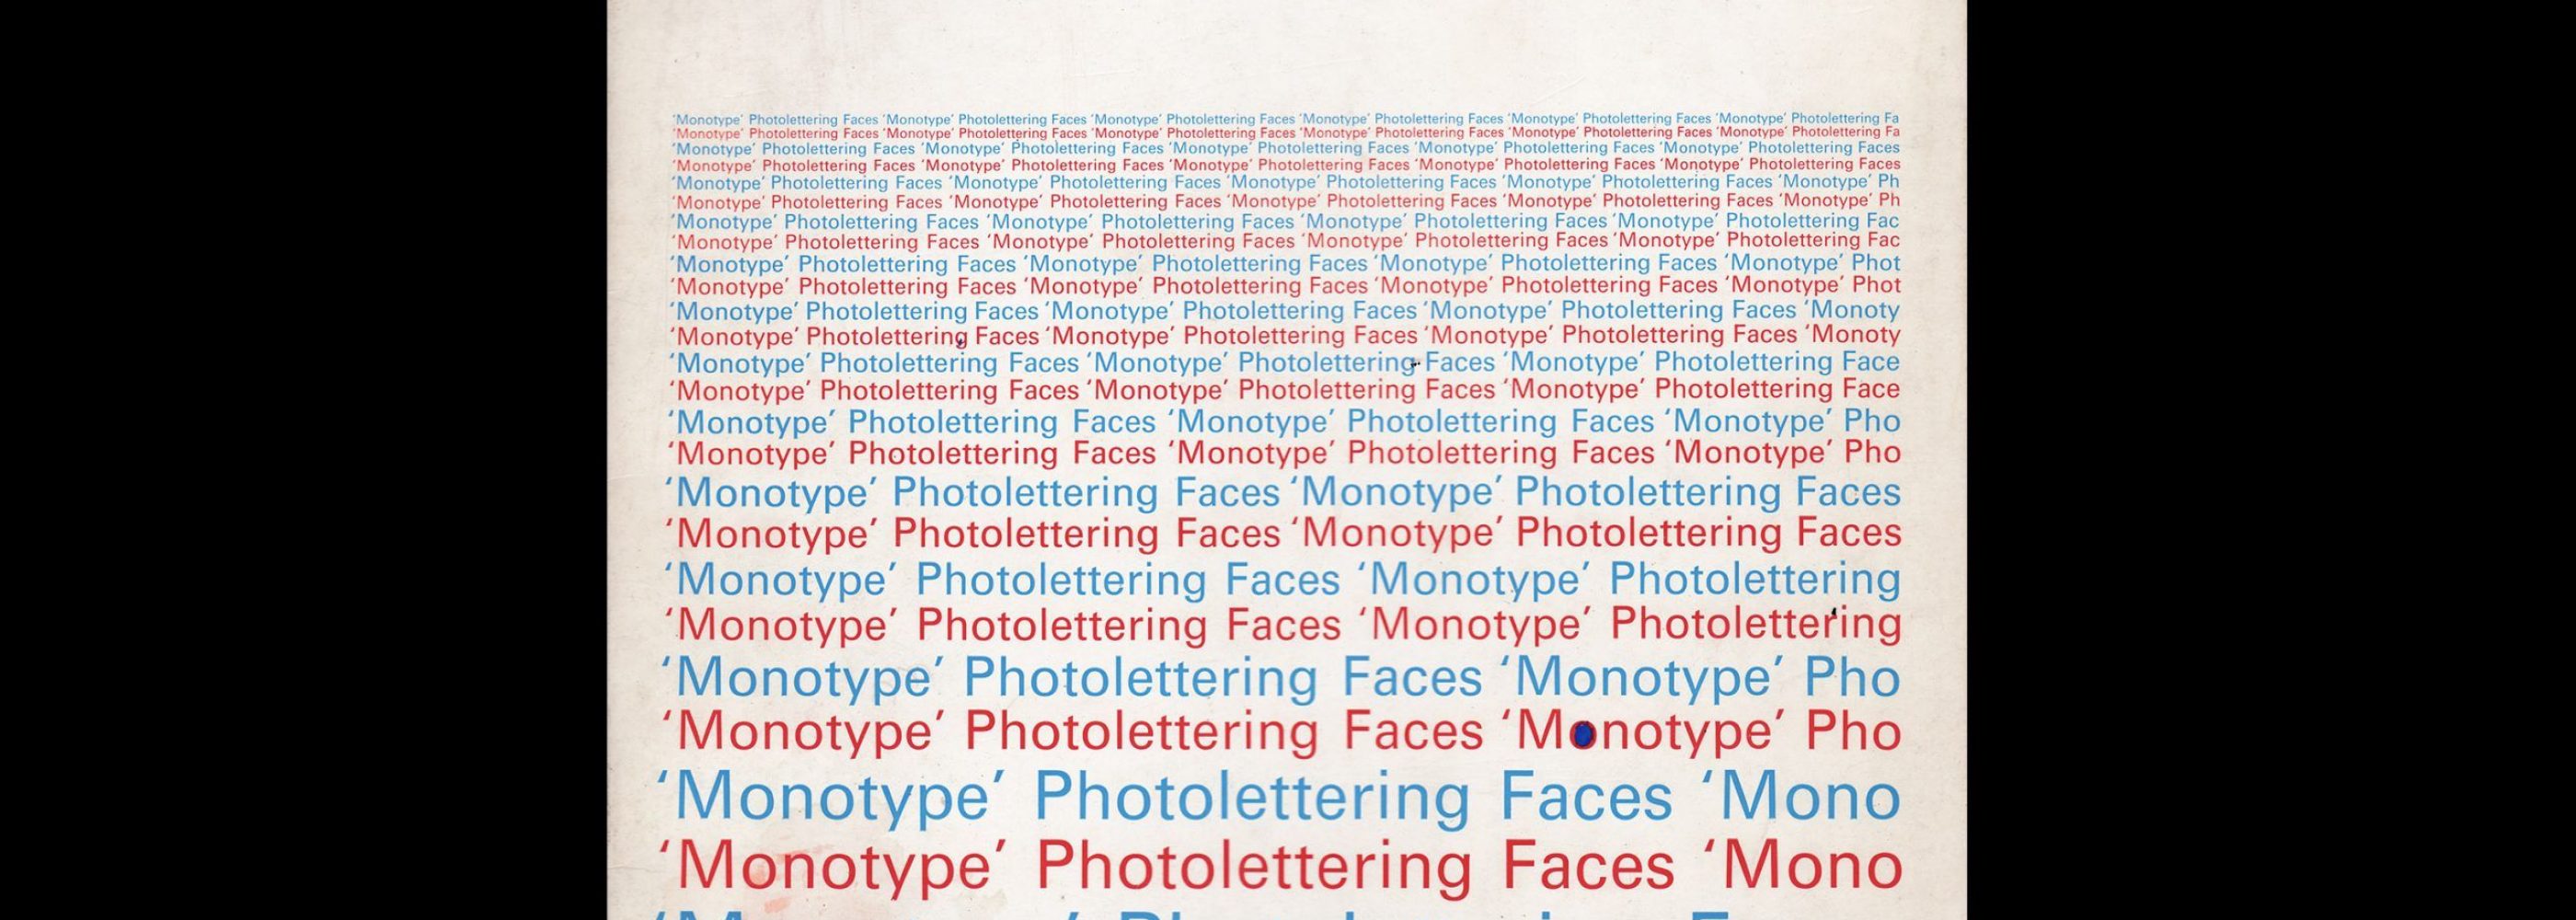 Monotype Photolettering Faces